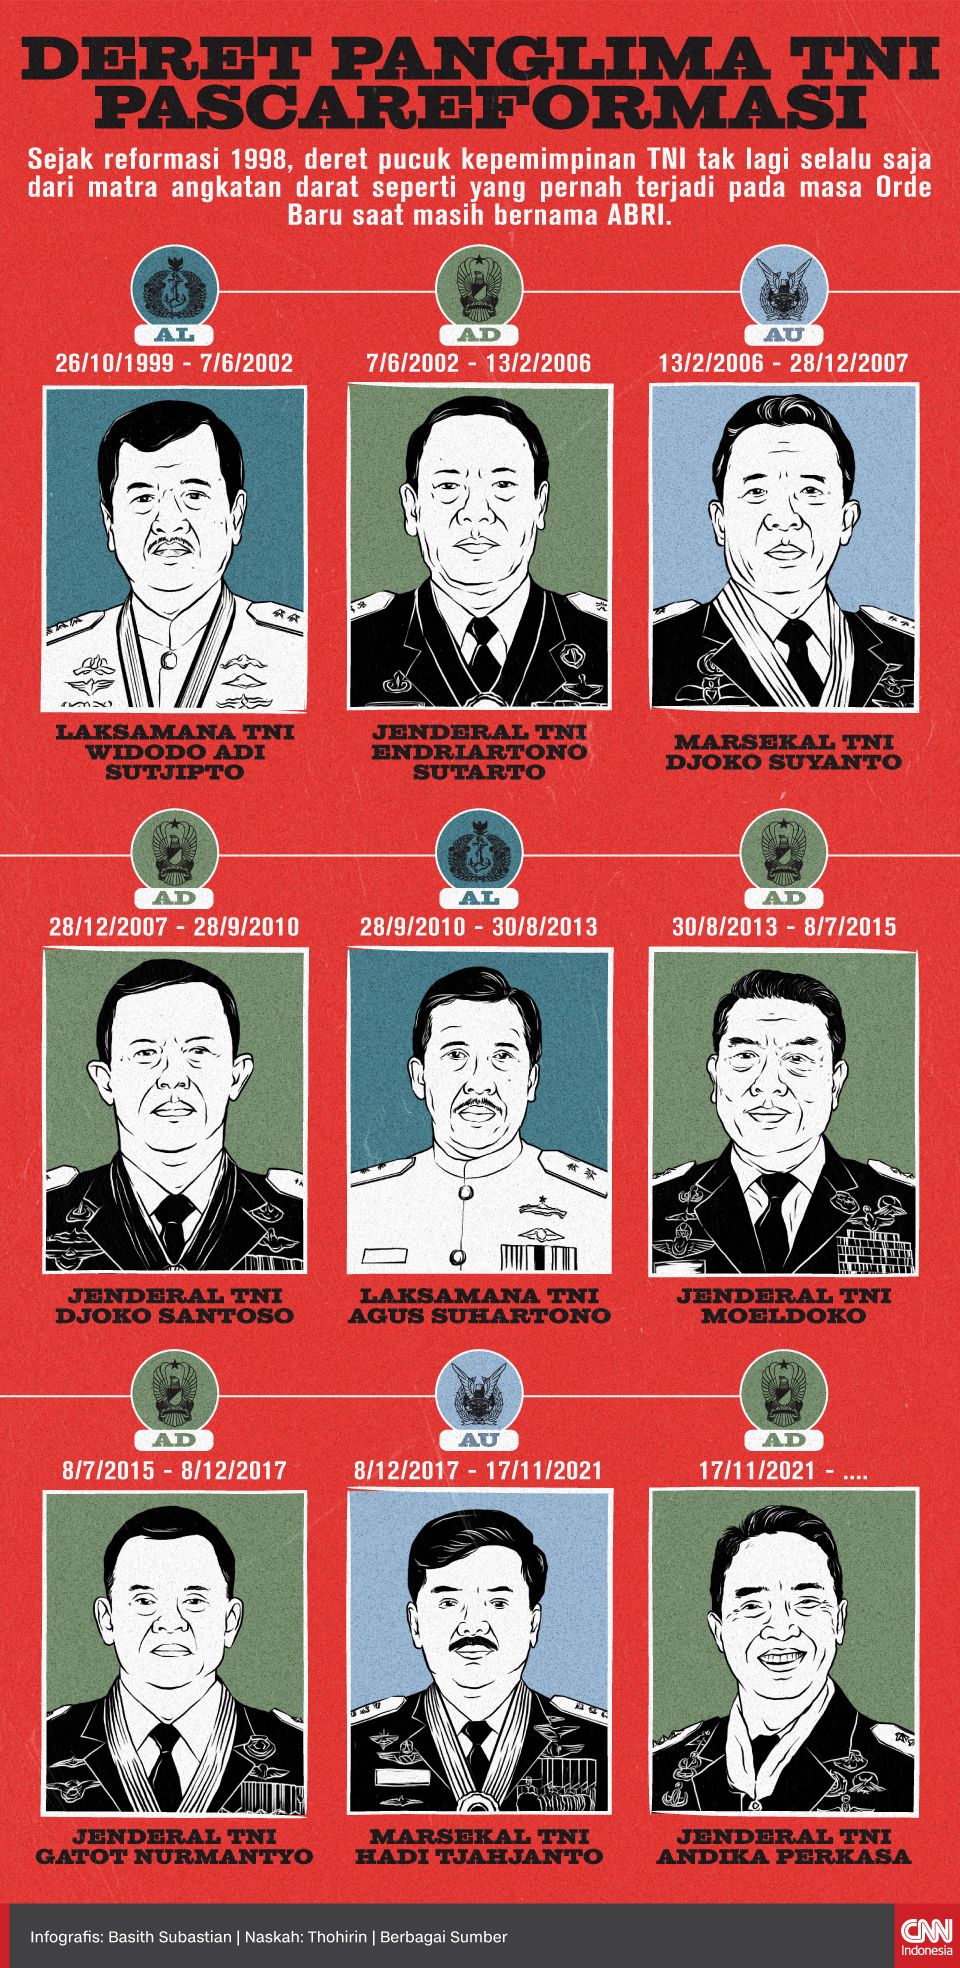 Infografis Deret Panglima TNI Pascareformasi